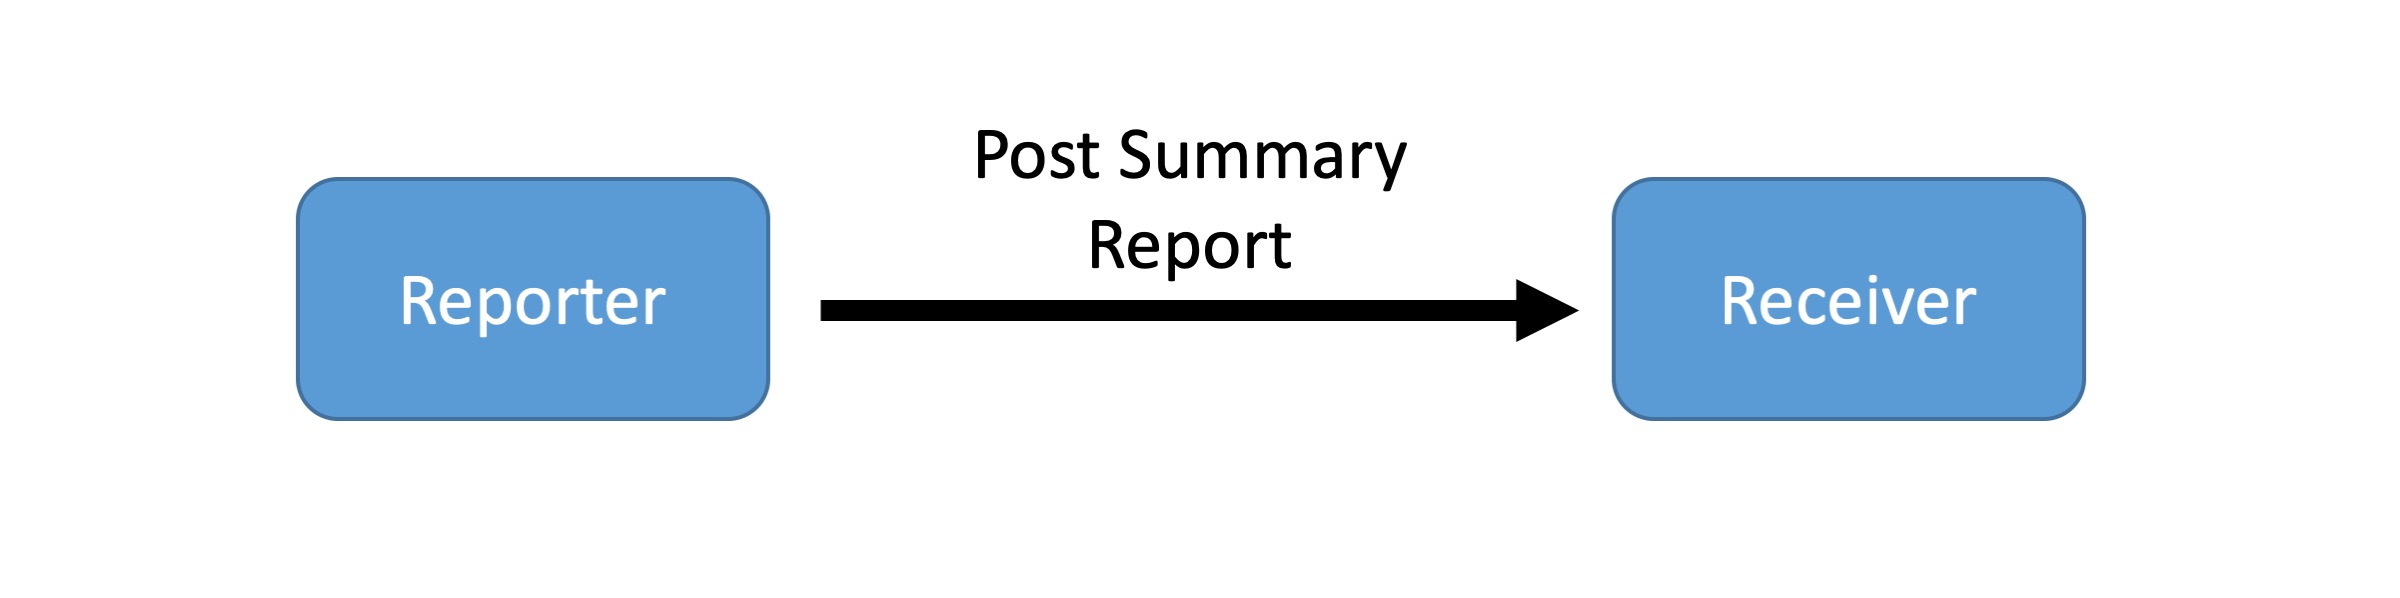 summ_report_post.jpg